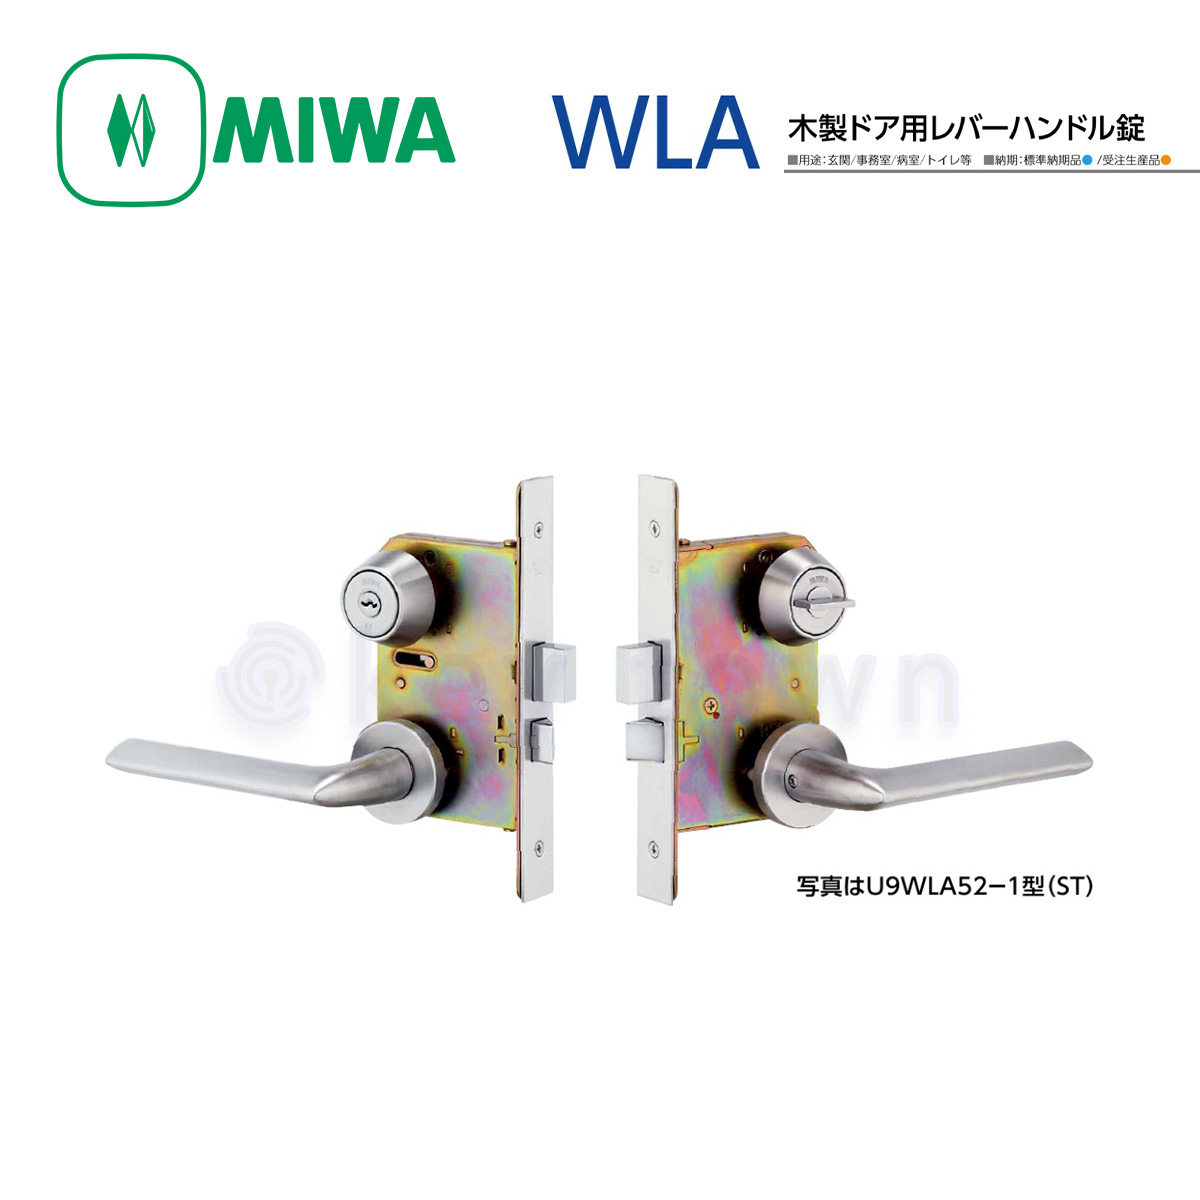 MIWA 【美和ロック】 木製ドア用レバーハンドル [MIWA-WLA] U9WLA52-1型｜鍵・シリンダーの格安ネット通販【鍵TOWN】